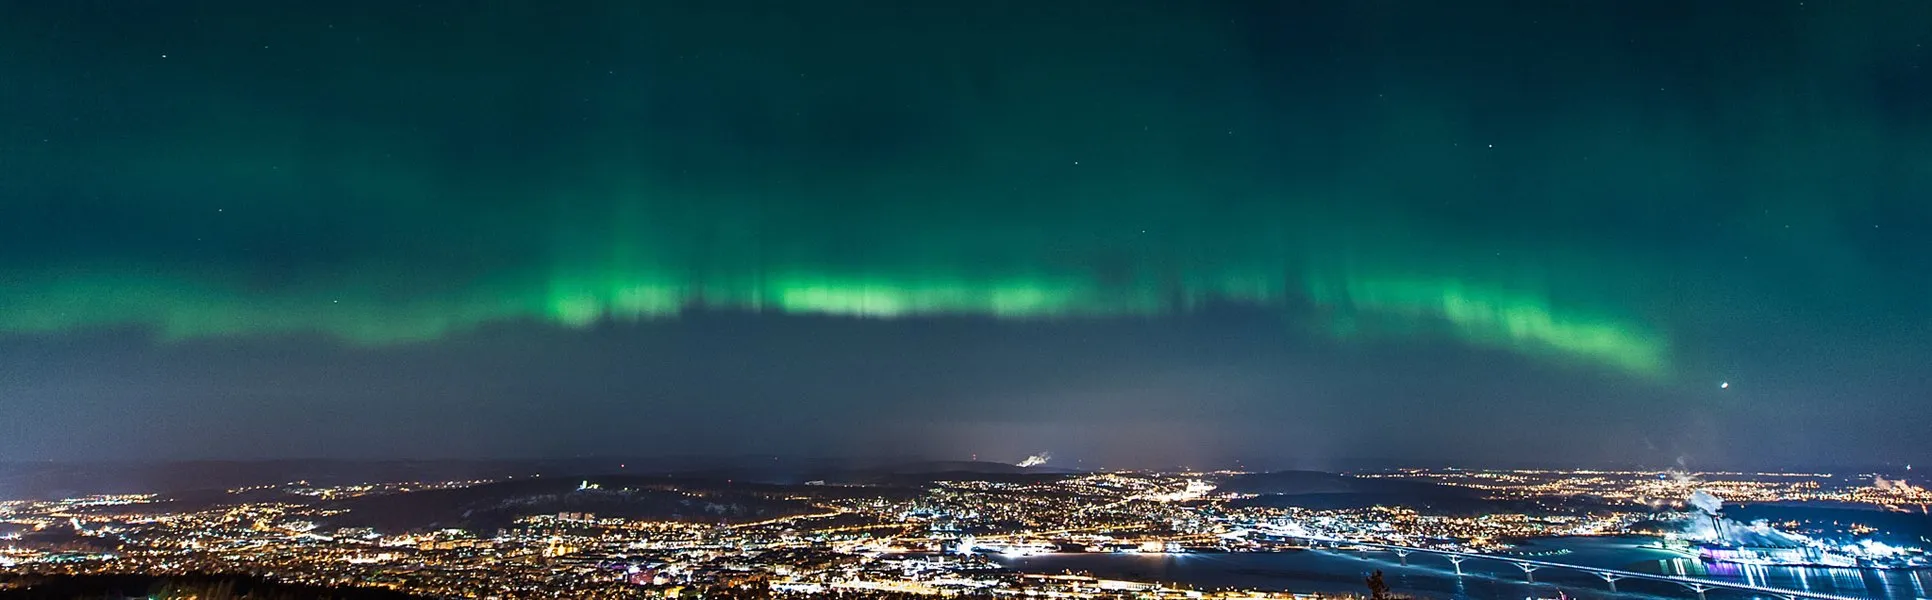 Northern lights over Sundsvall